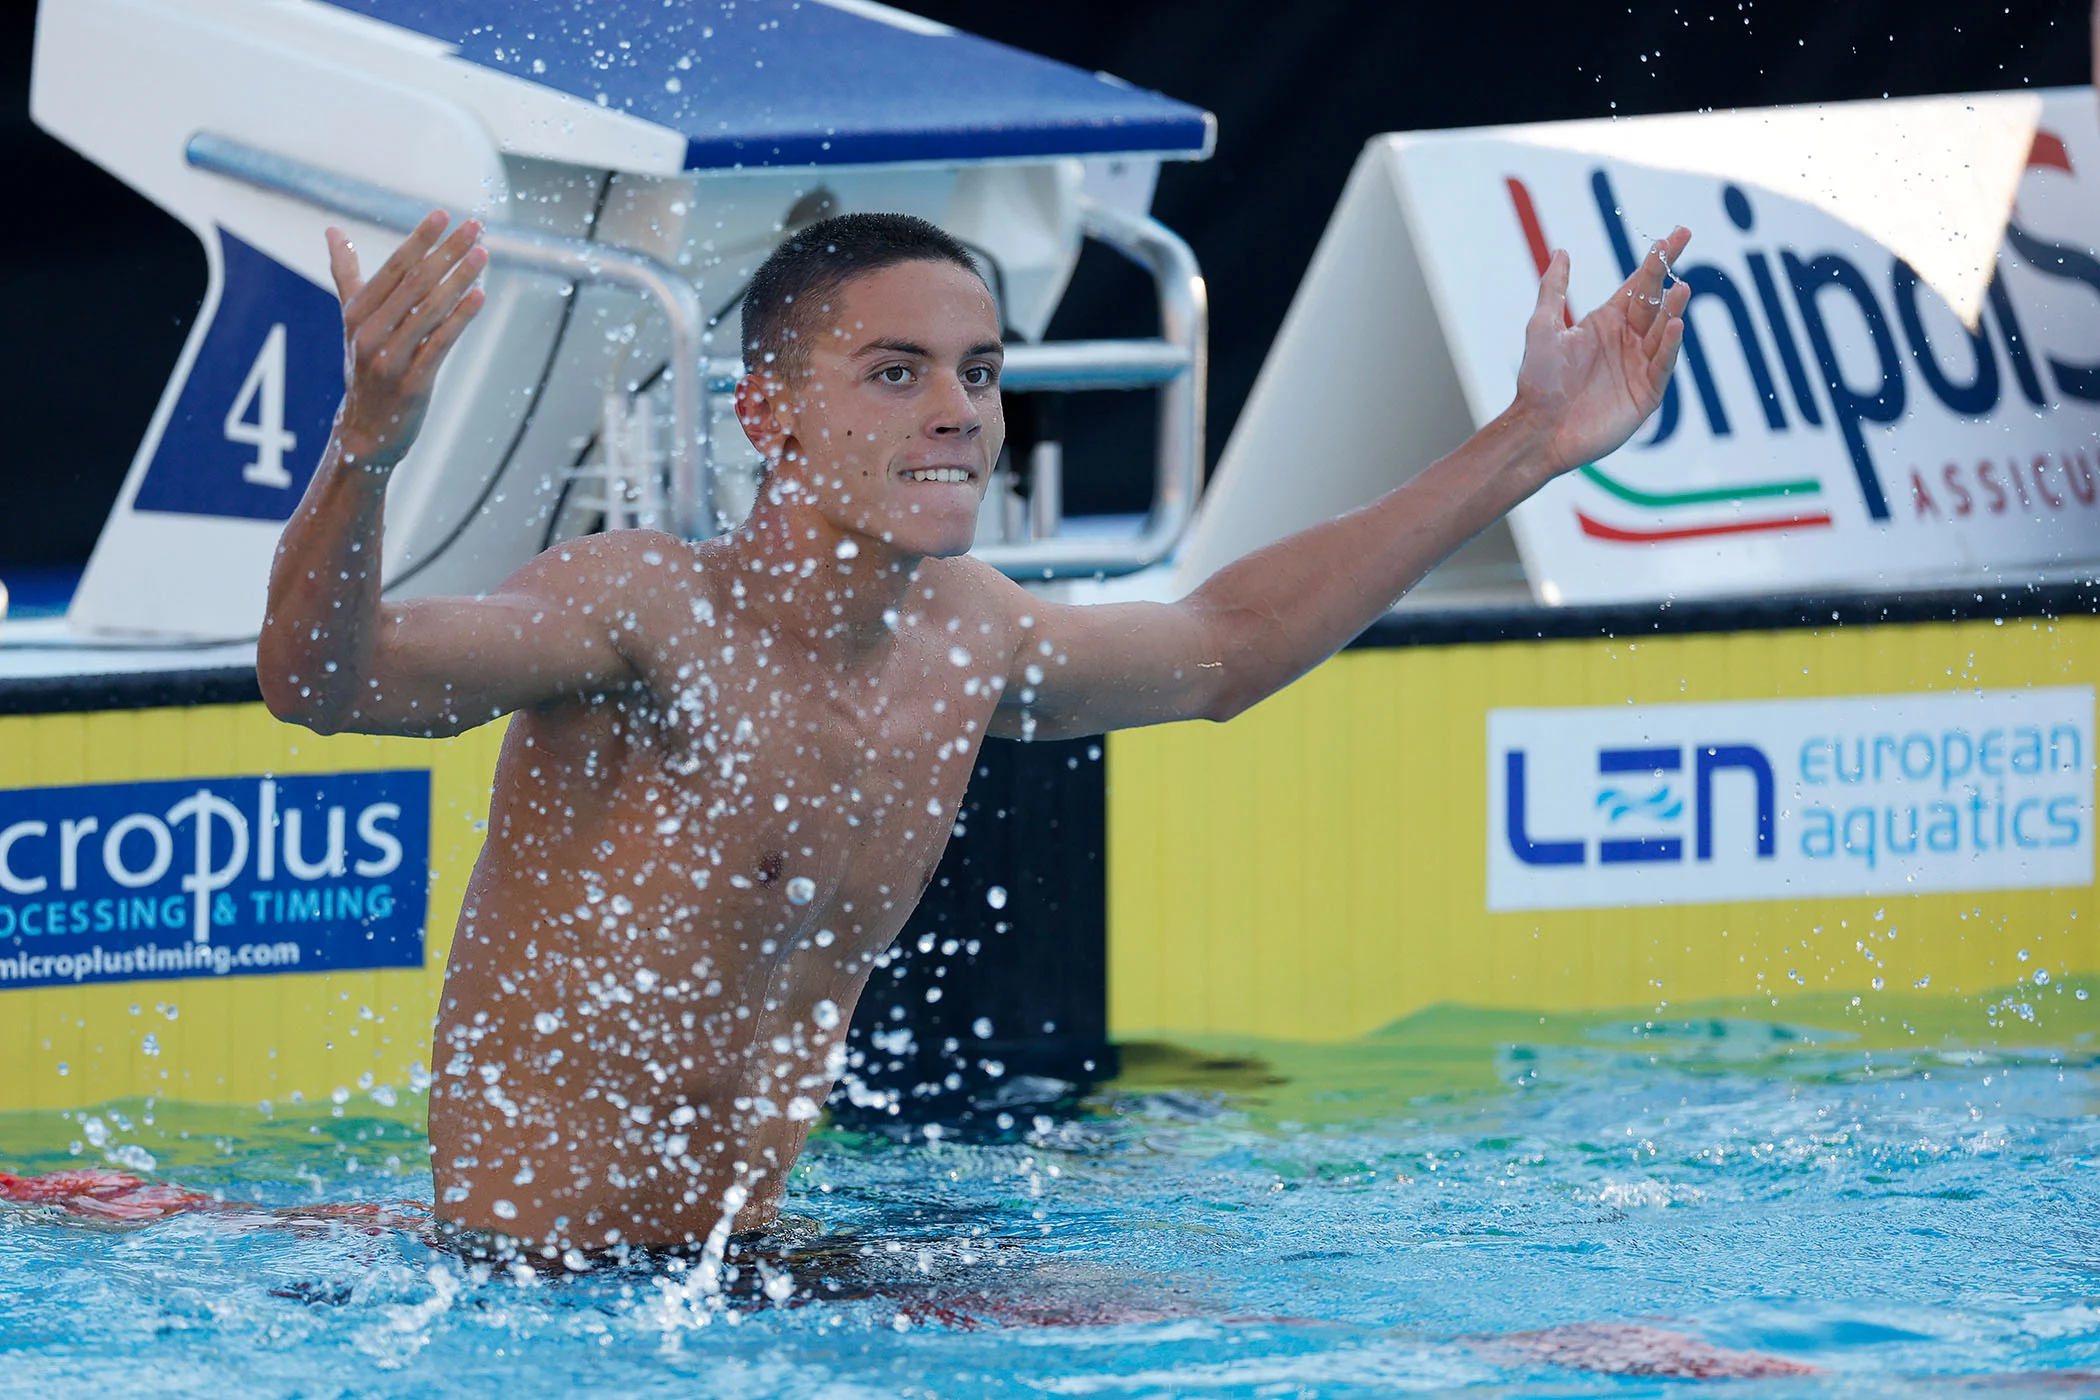 European Aquatics Championships, Rome (ITA), Day 3 – Summary